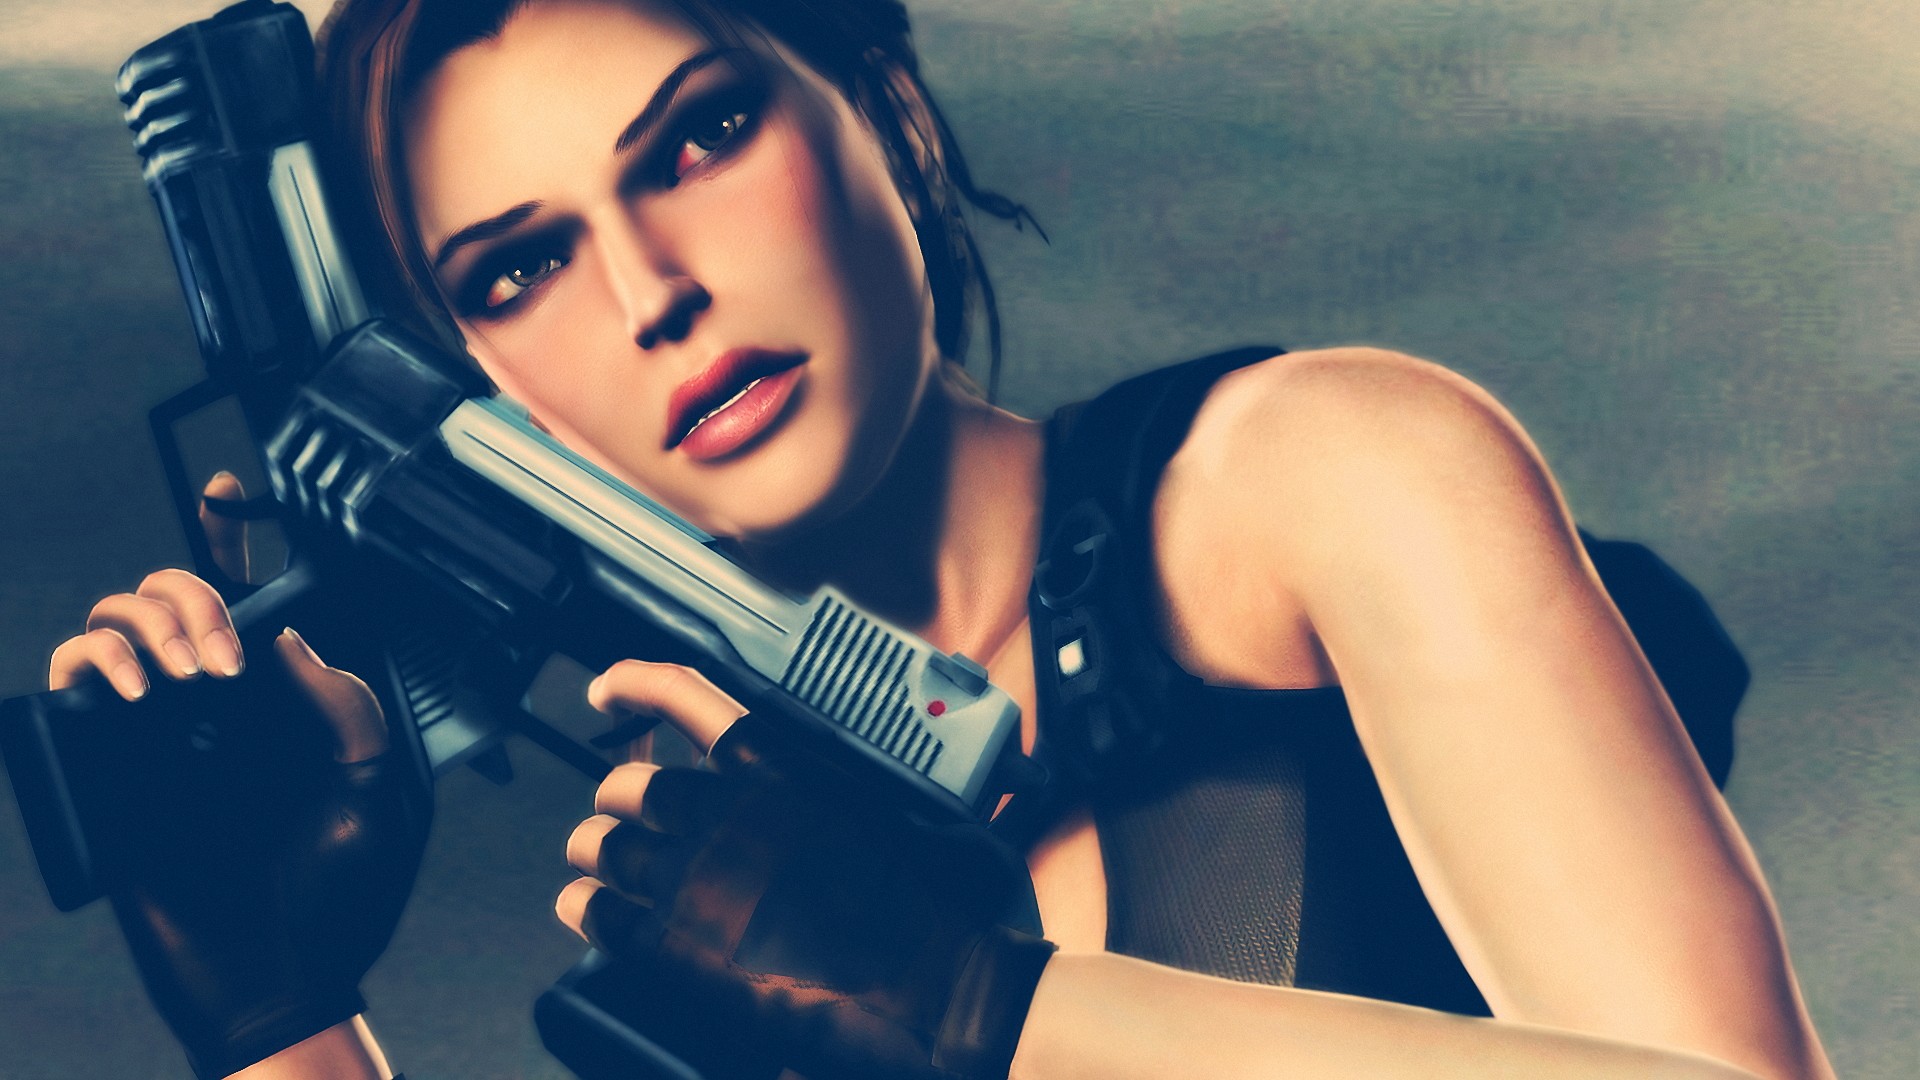 General 1920x1080 Tomb Raider Tomb Raider: Underworld gun pistol video games girls with guns dual wield Lara Croft (Tomb Raider) video game girls video game characters PC gaming weapon